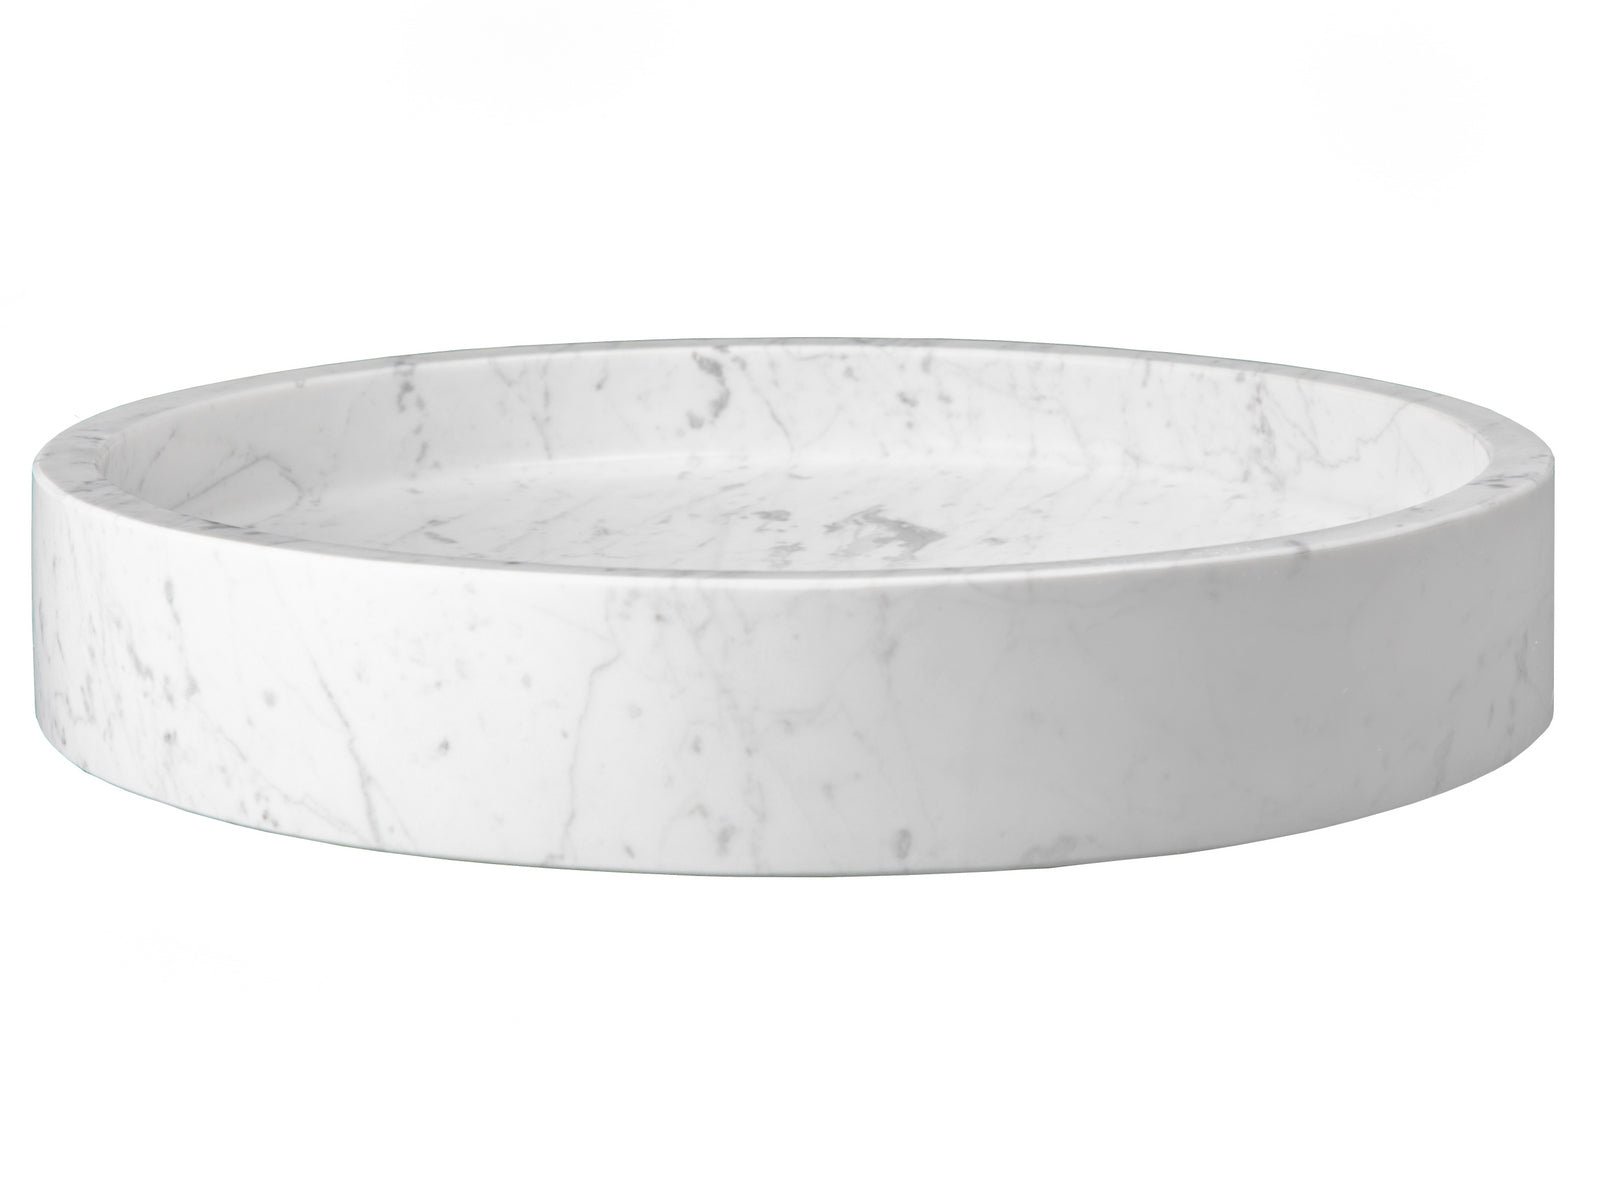 Low Round Vessel Sink White Carrara Marble